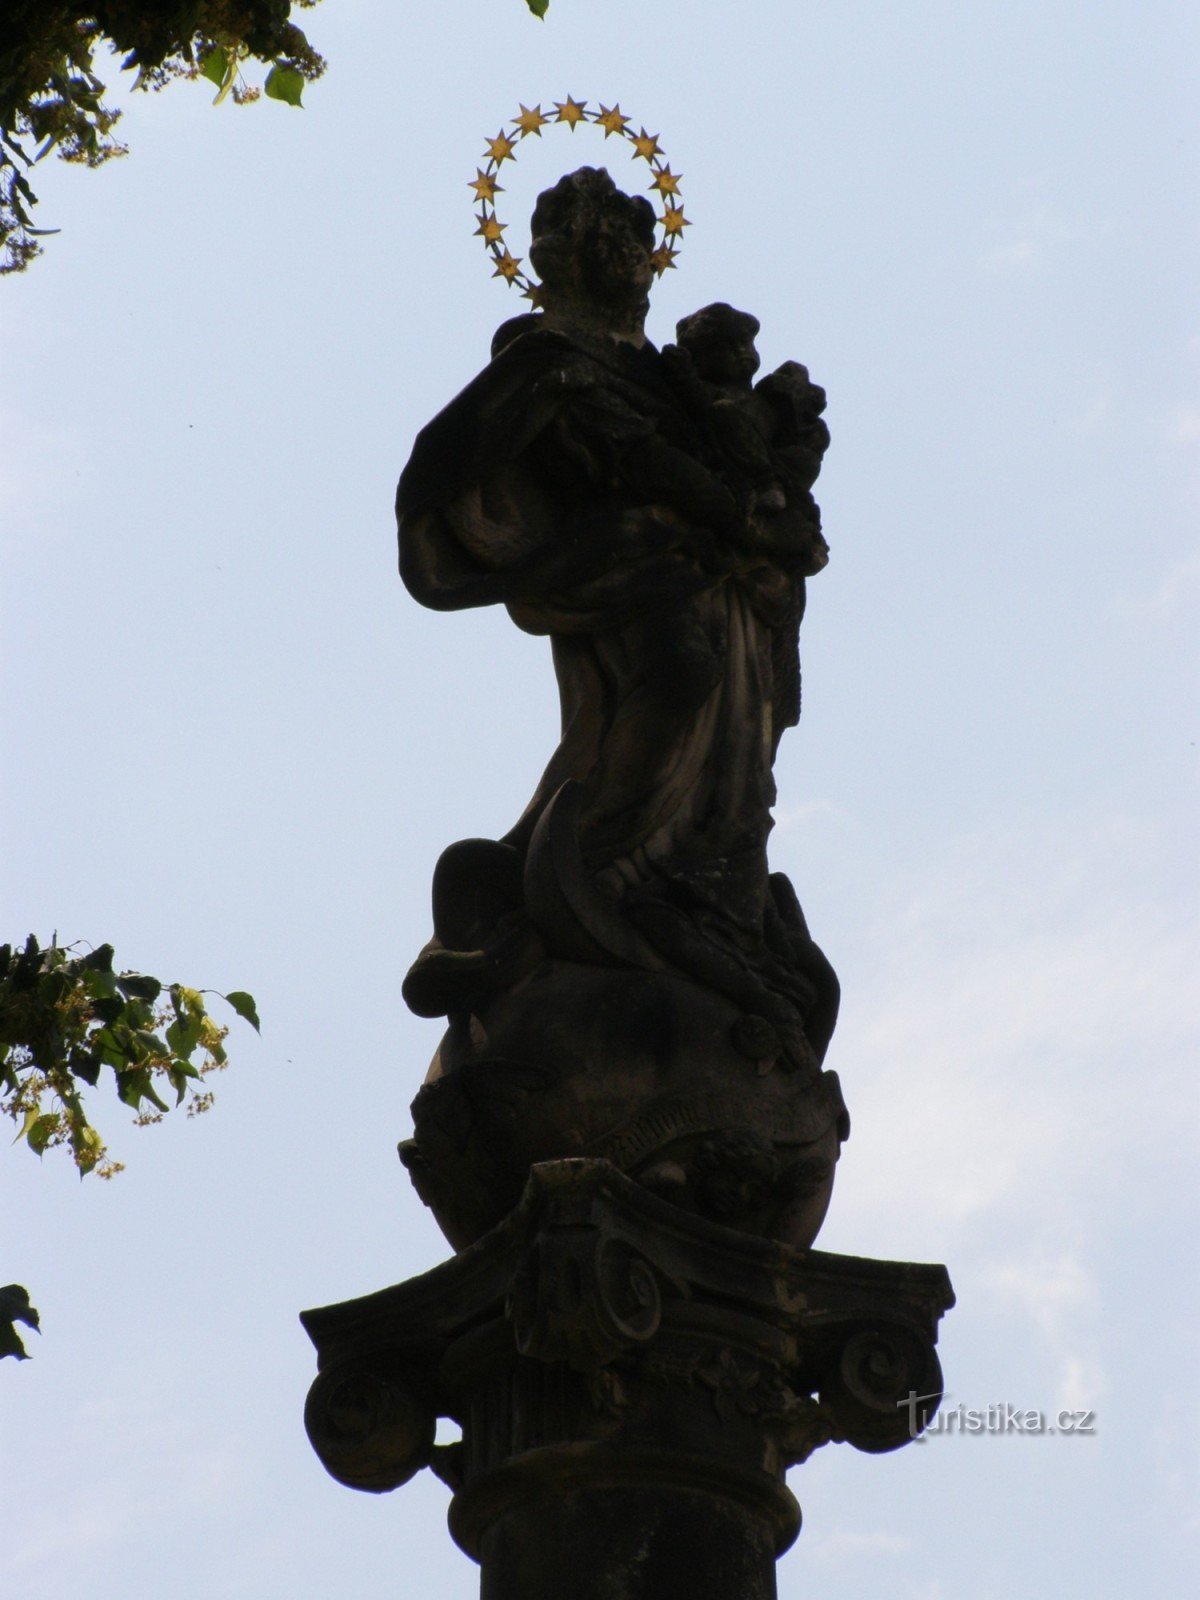 Vaahterapuu - pylväs, jossa on Our Lady -patsas